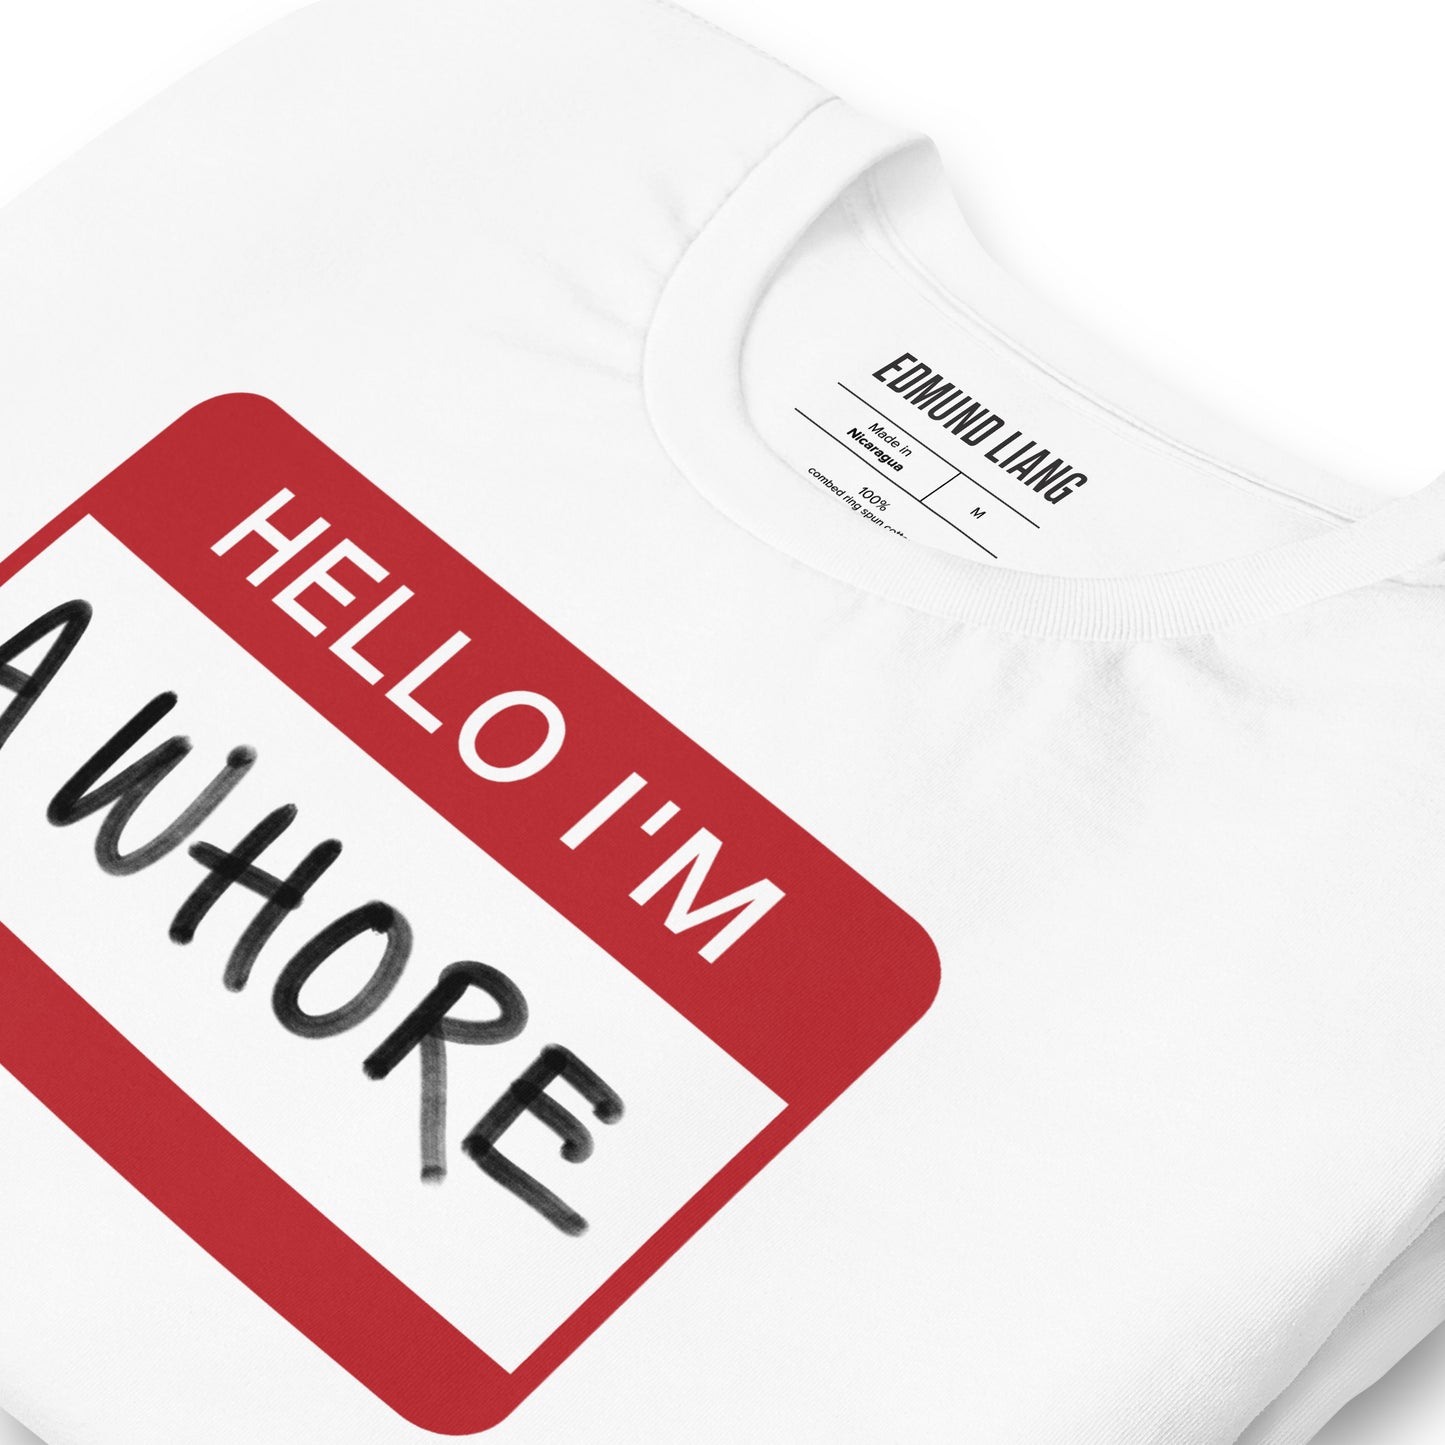 Hello I'm A Whore T-shirt